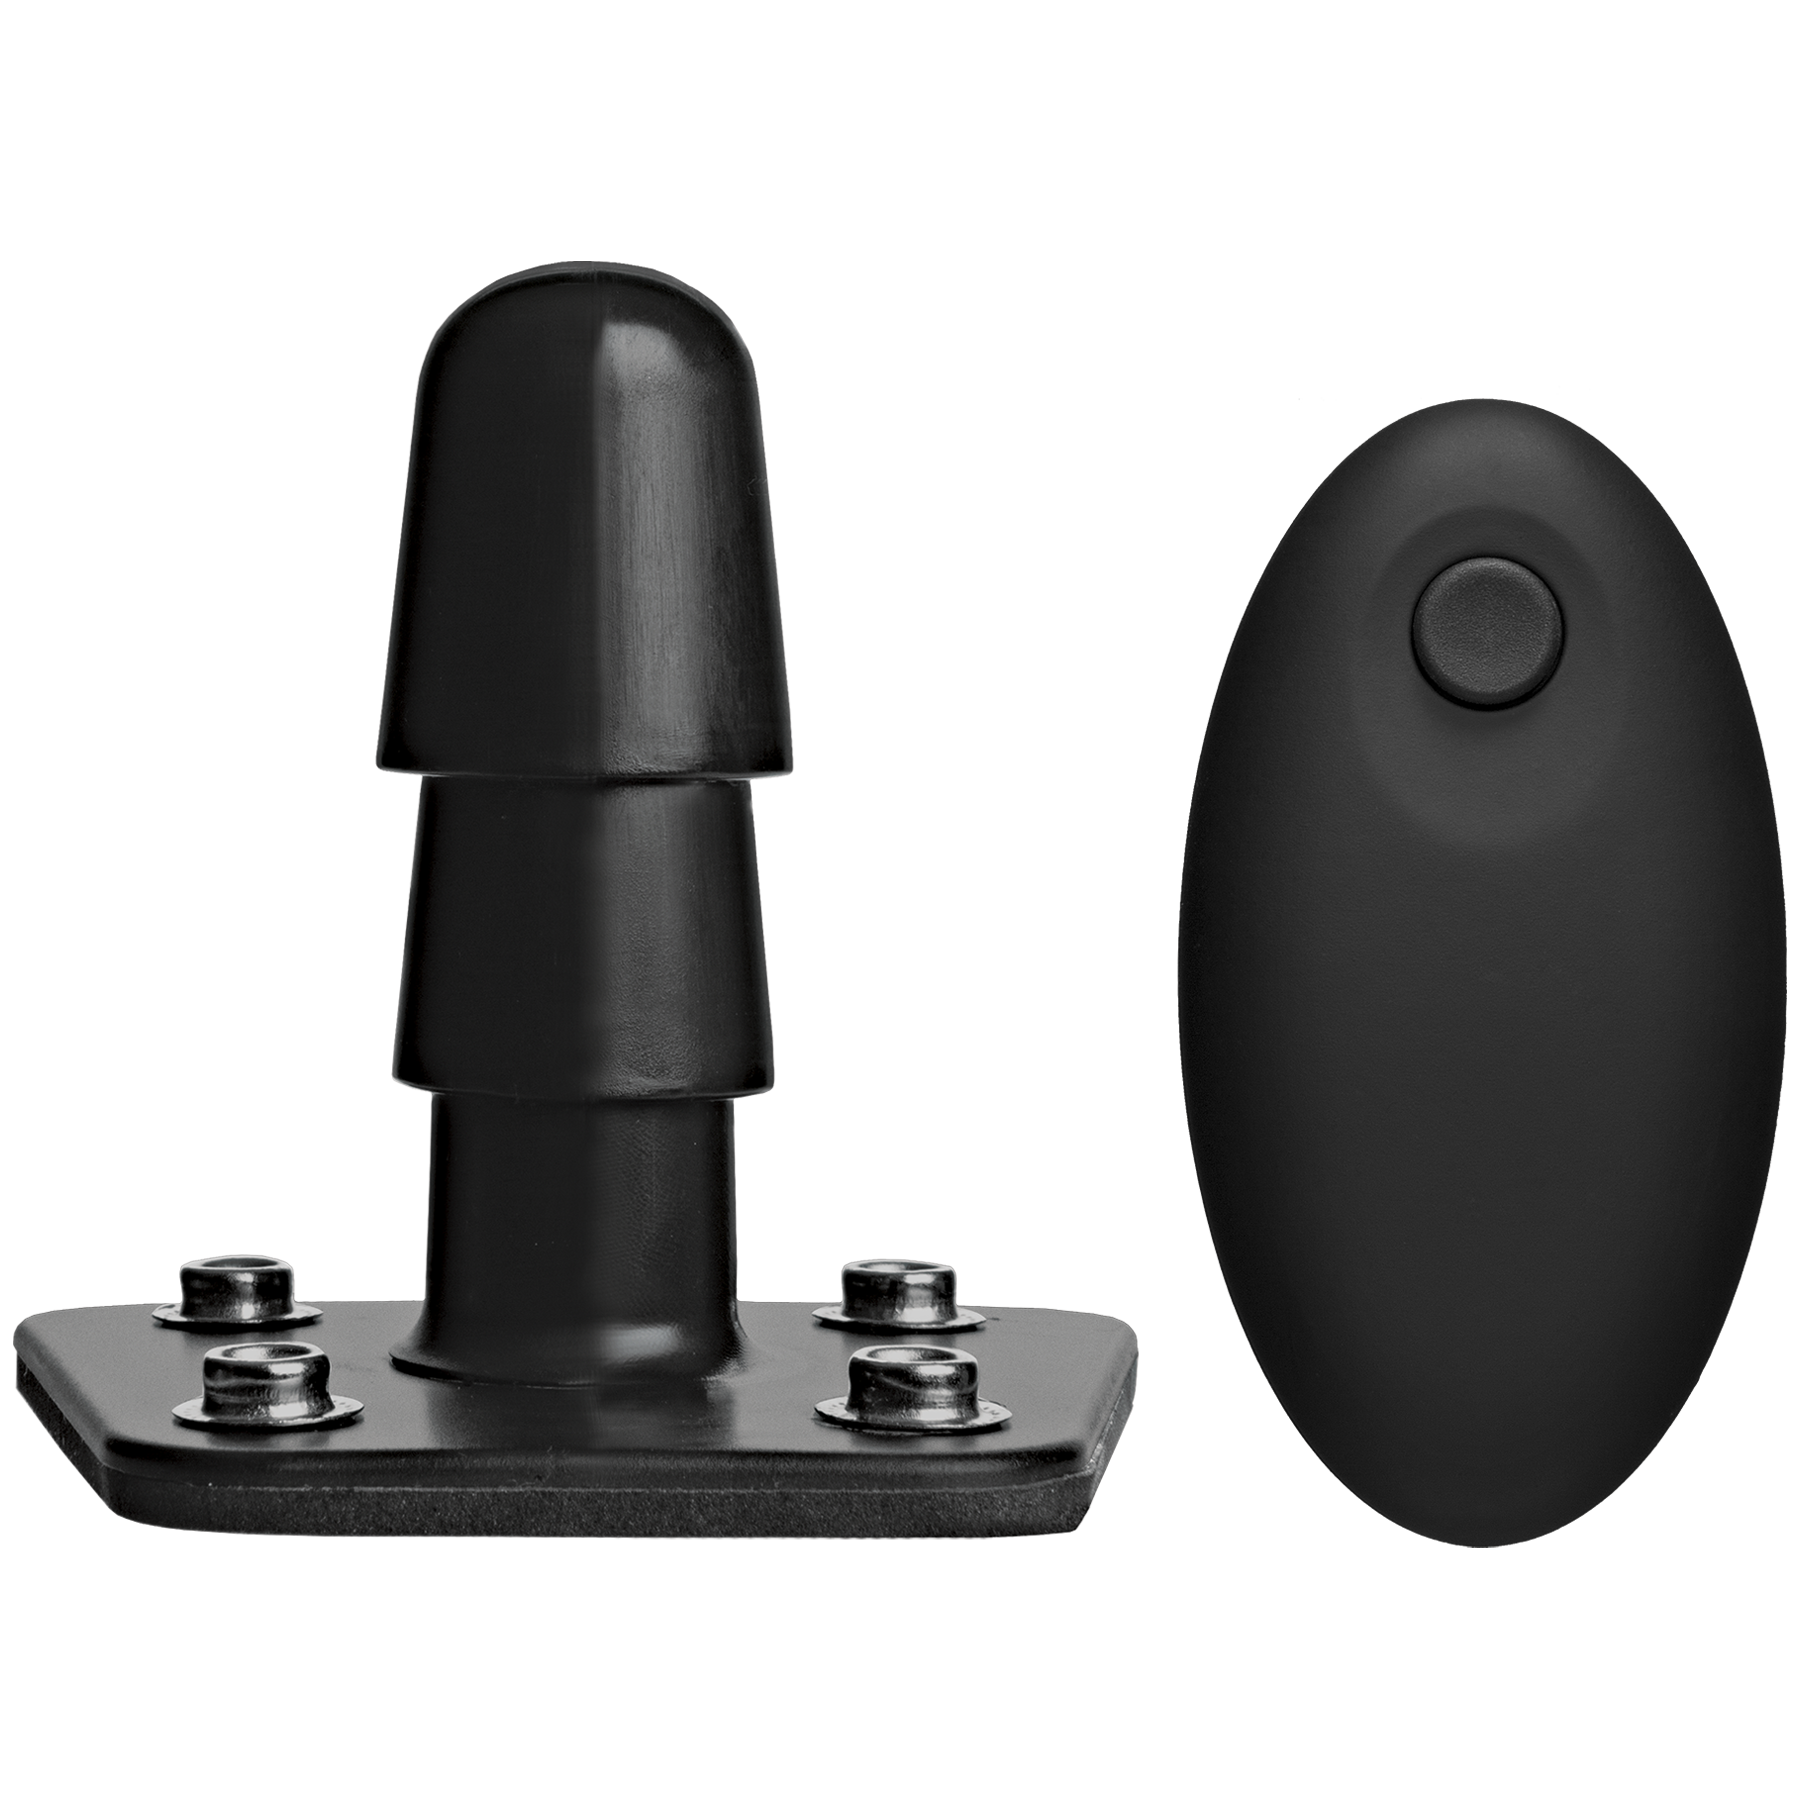 Vac+U+Lock+Vibrating+Plug+With+Wireless+Remote+USB+Harness+Accessory